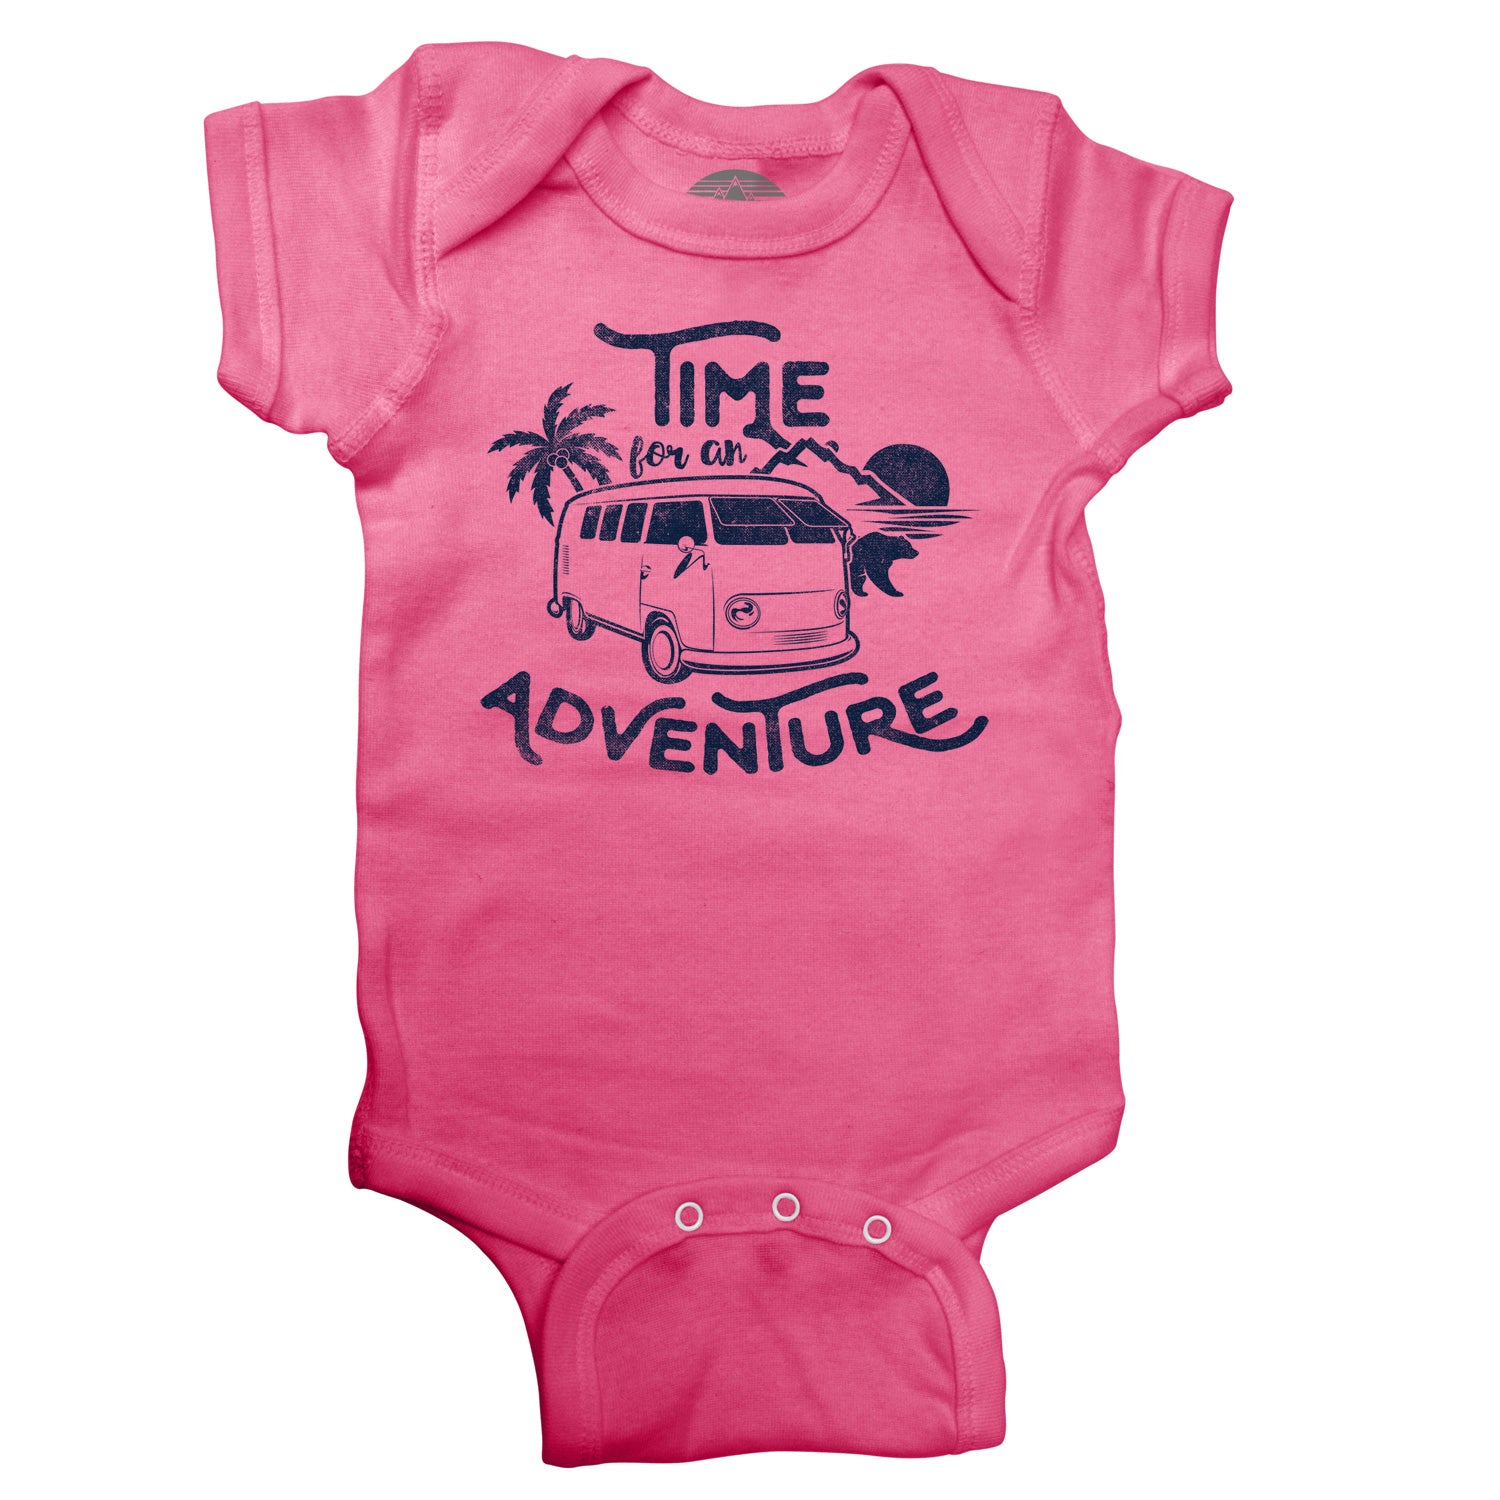 Time For An Adventure Infant Bodysuit - Unisex Fit